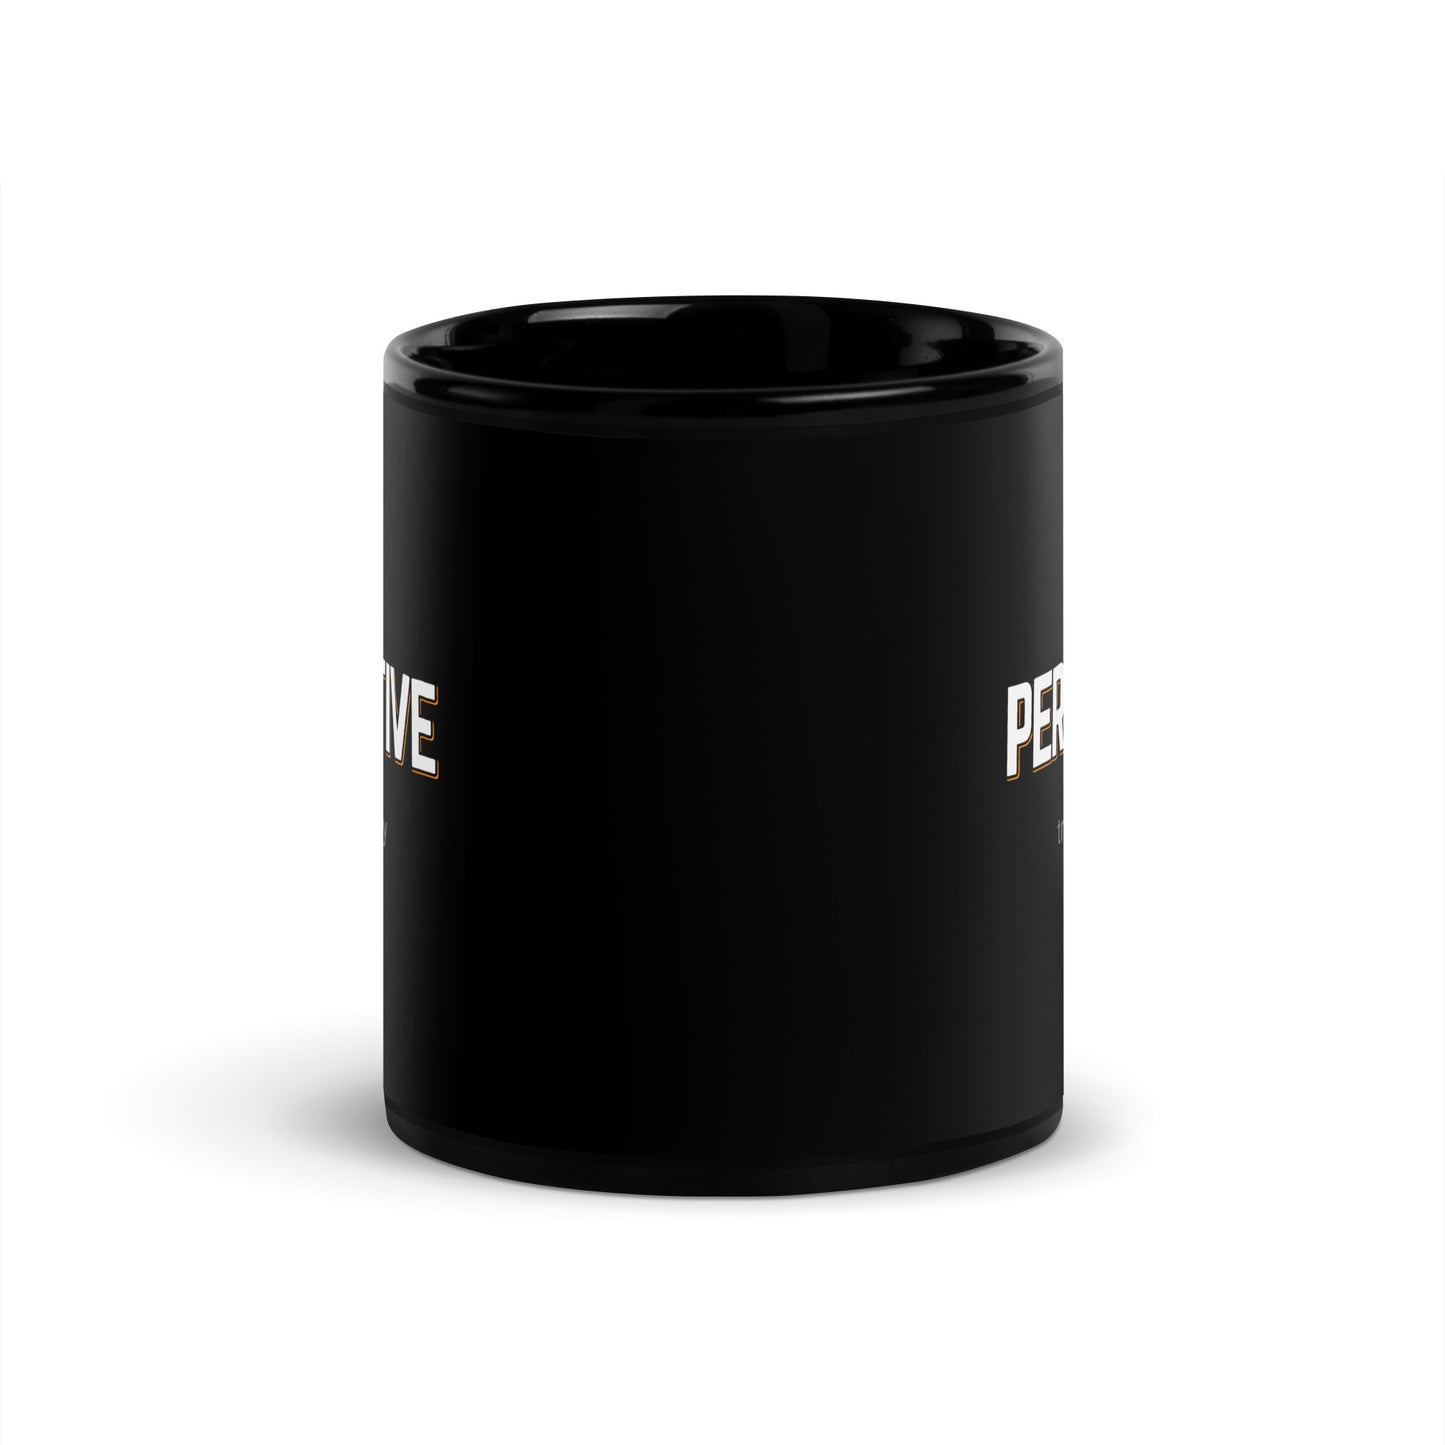 PERCEPTIVE Black Coffee Mug Bold 11 oz or 15 oz